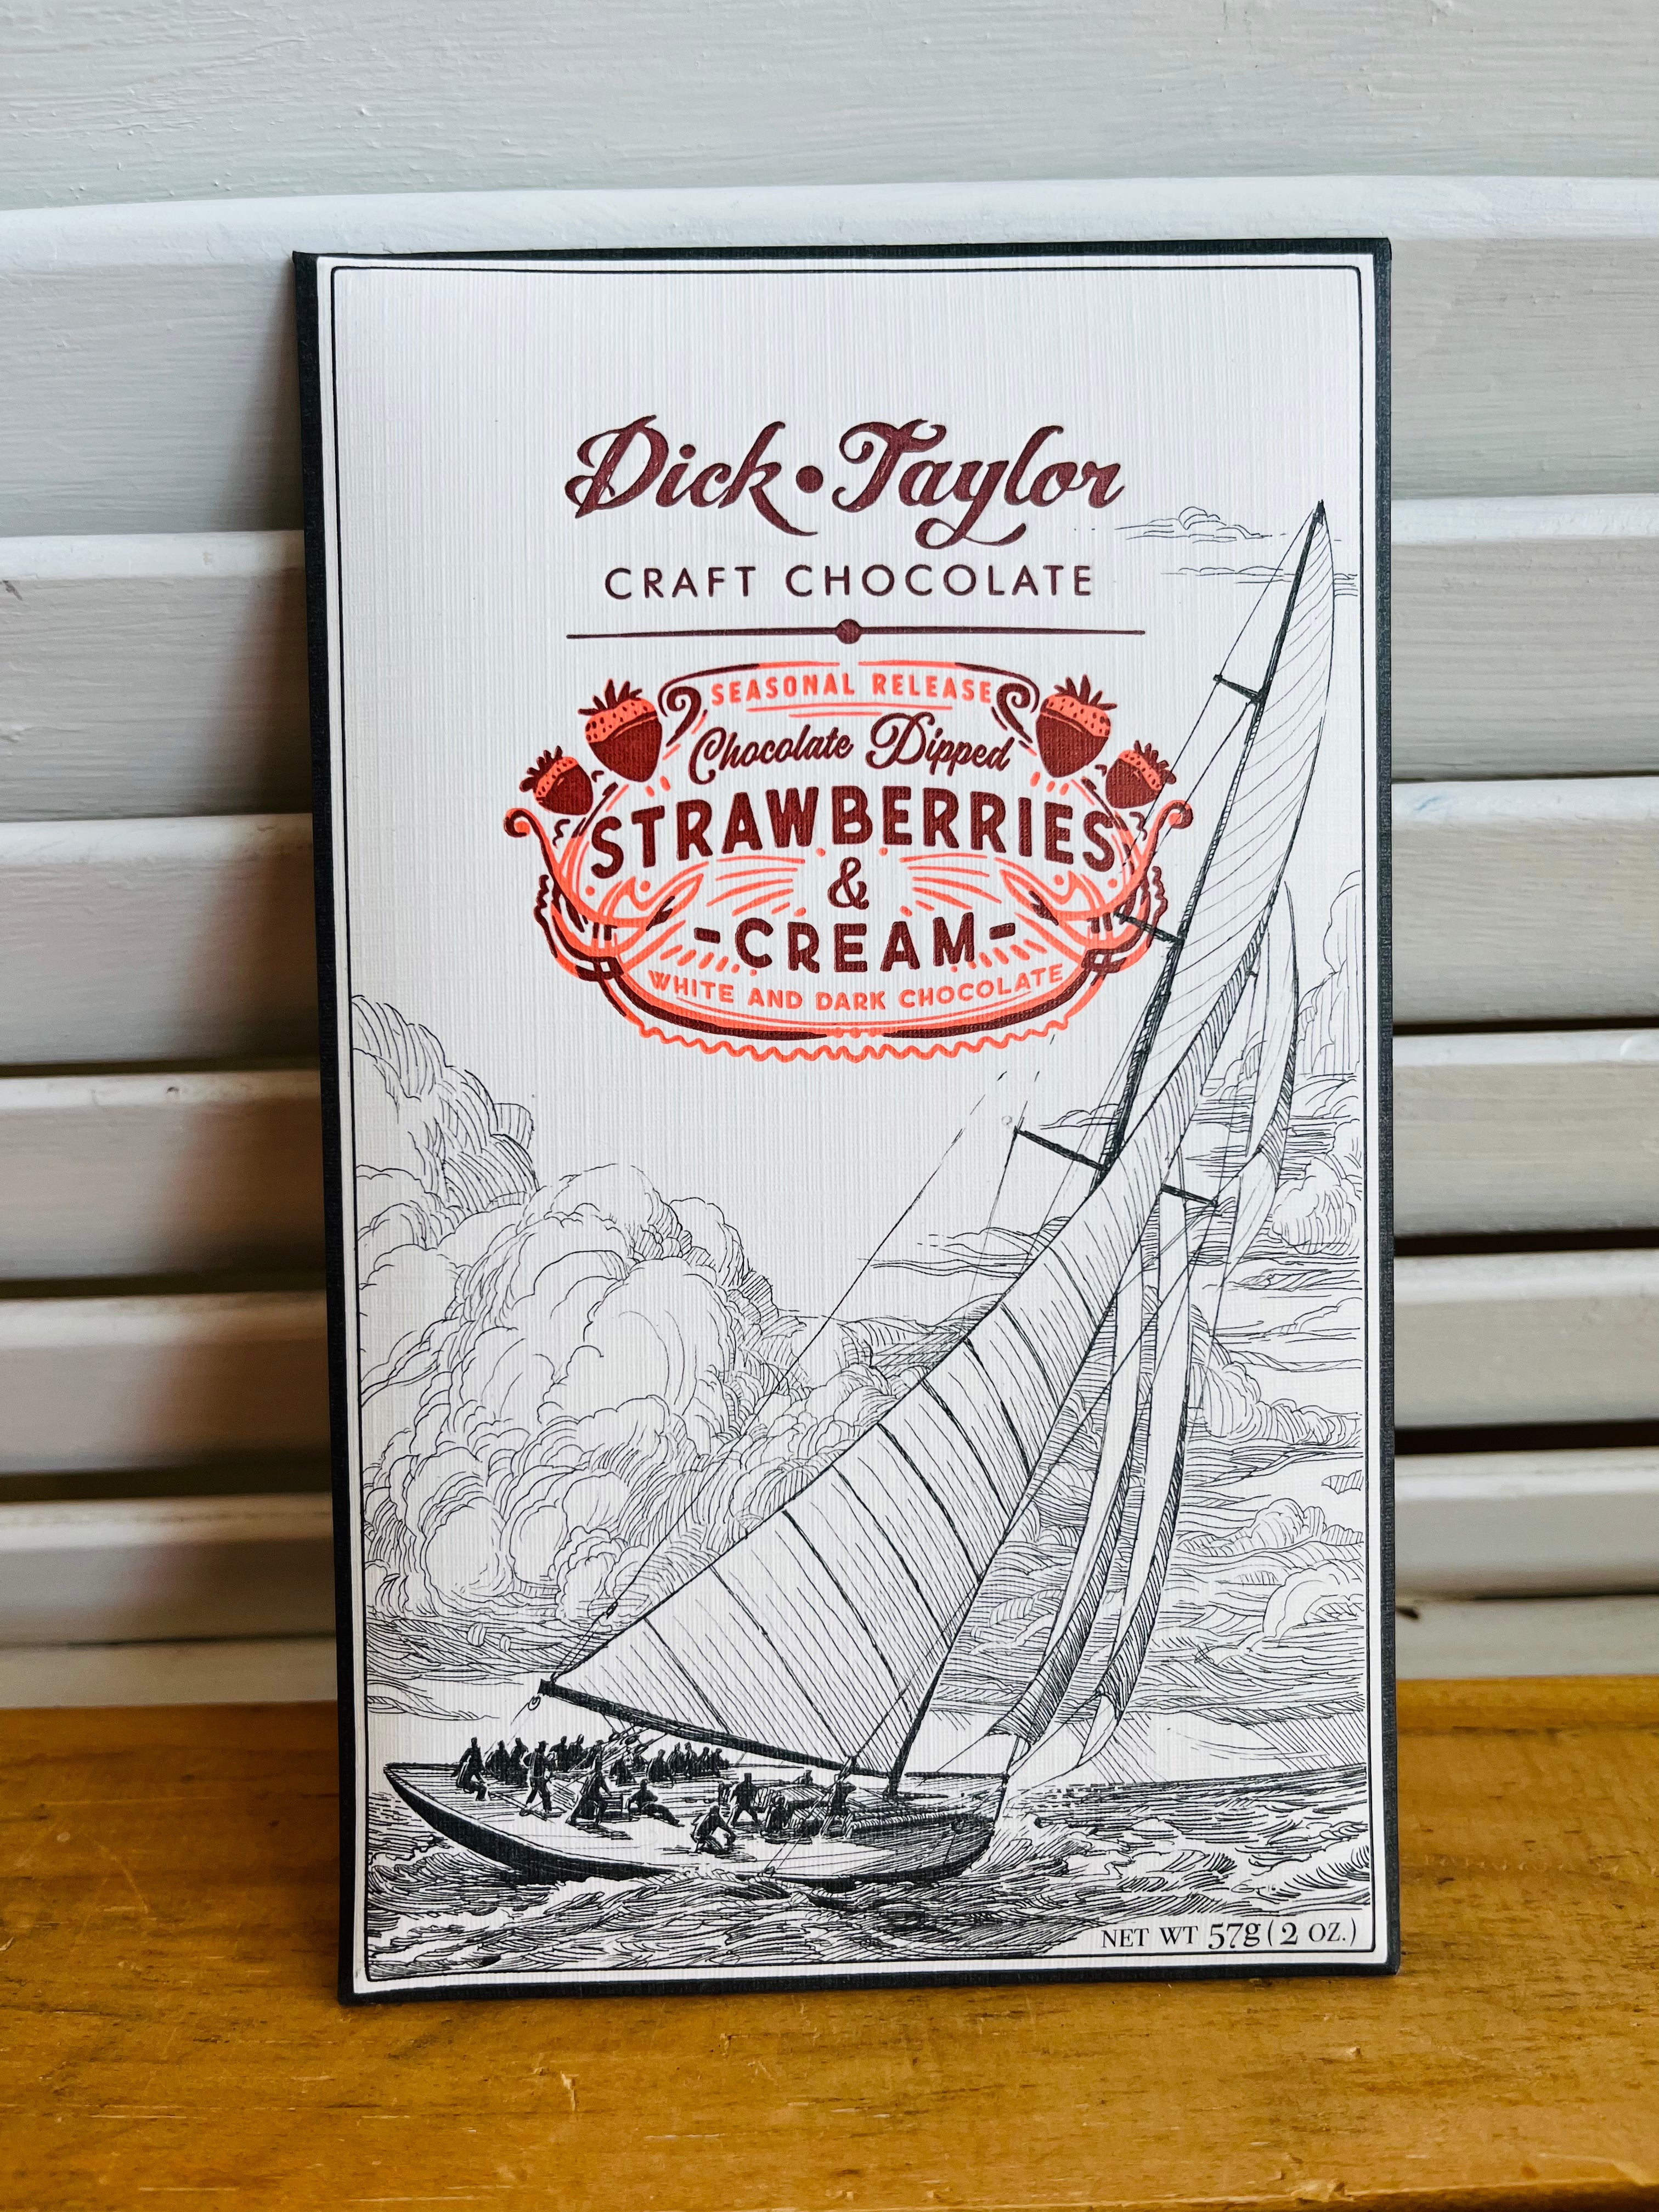 Strawberries & Cream - seasonal release bar from Dick Taylor Craft Chocolate